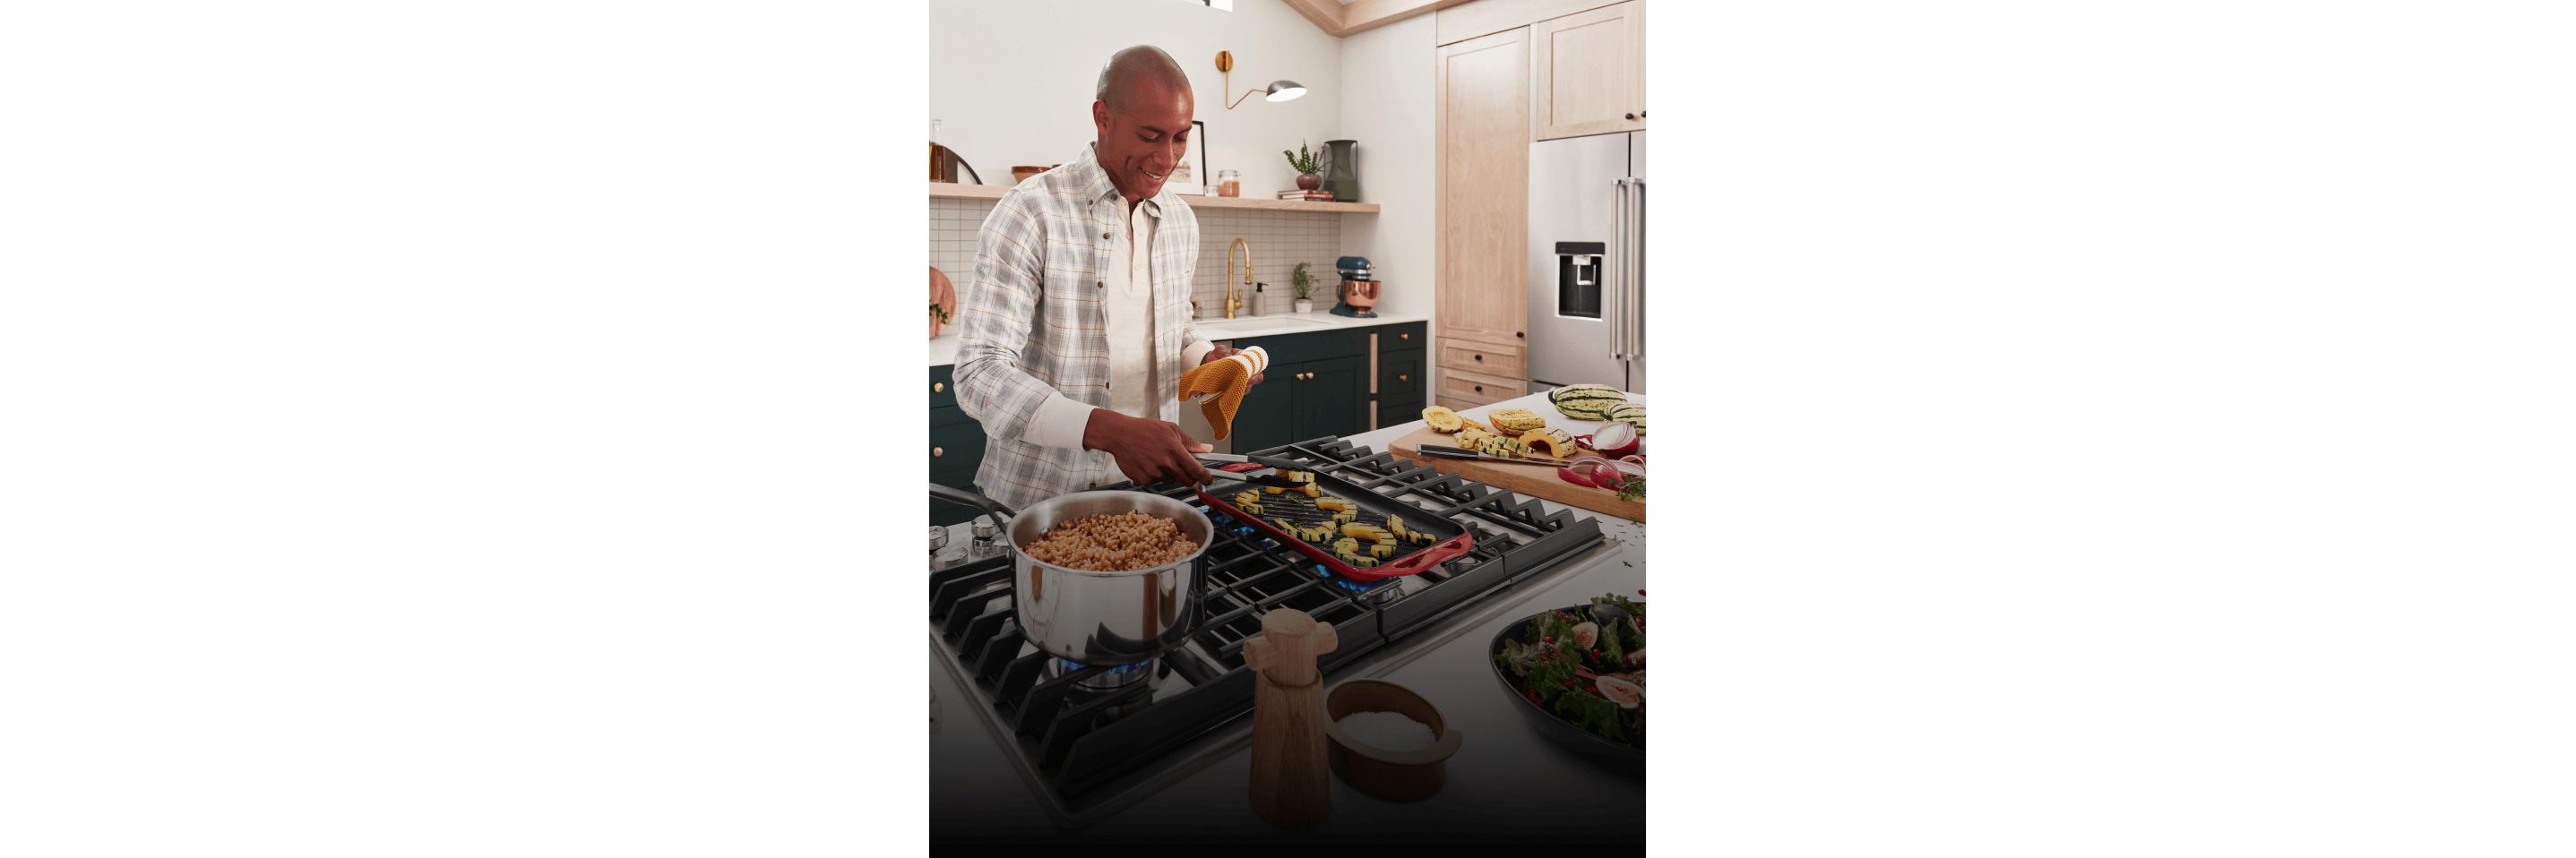 KitchenAid  Premium Countertop Kitchen Appliances